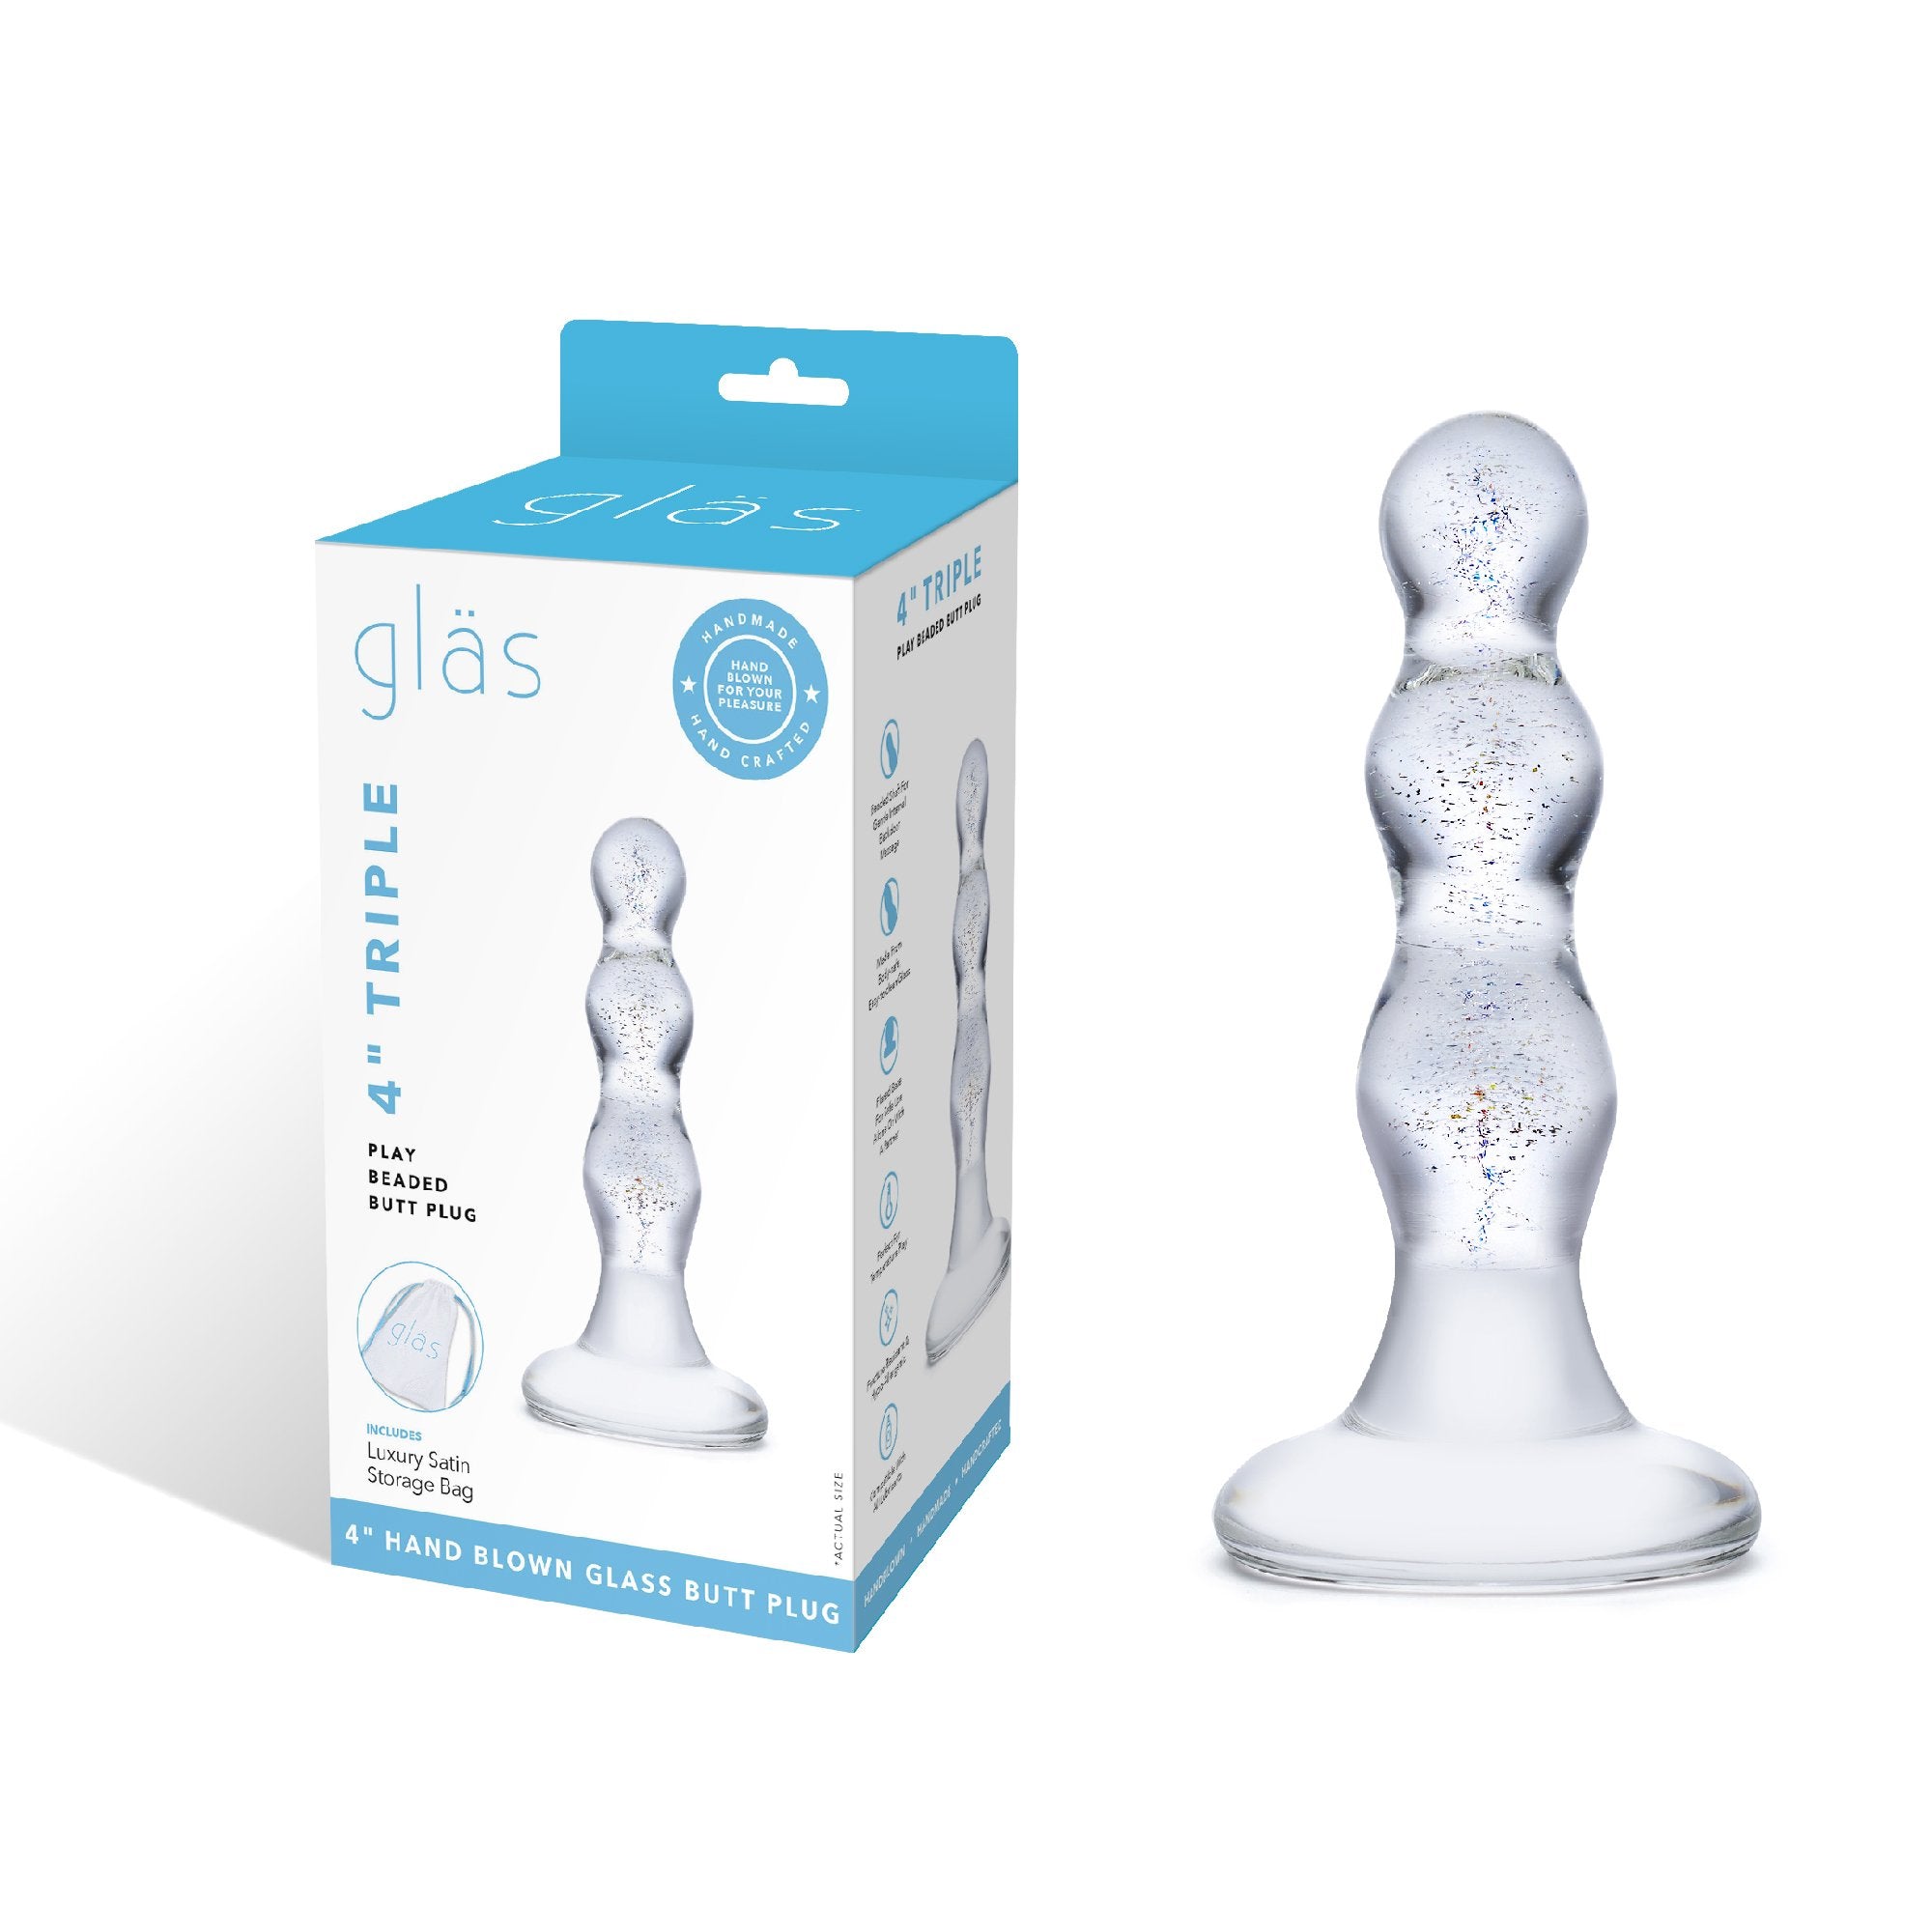 Packaging of the Gläs Triple Play Beaded Glass Butt Plug